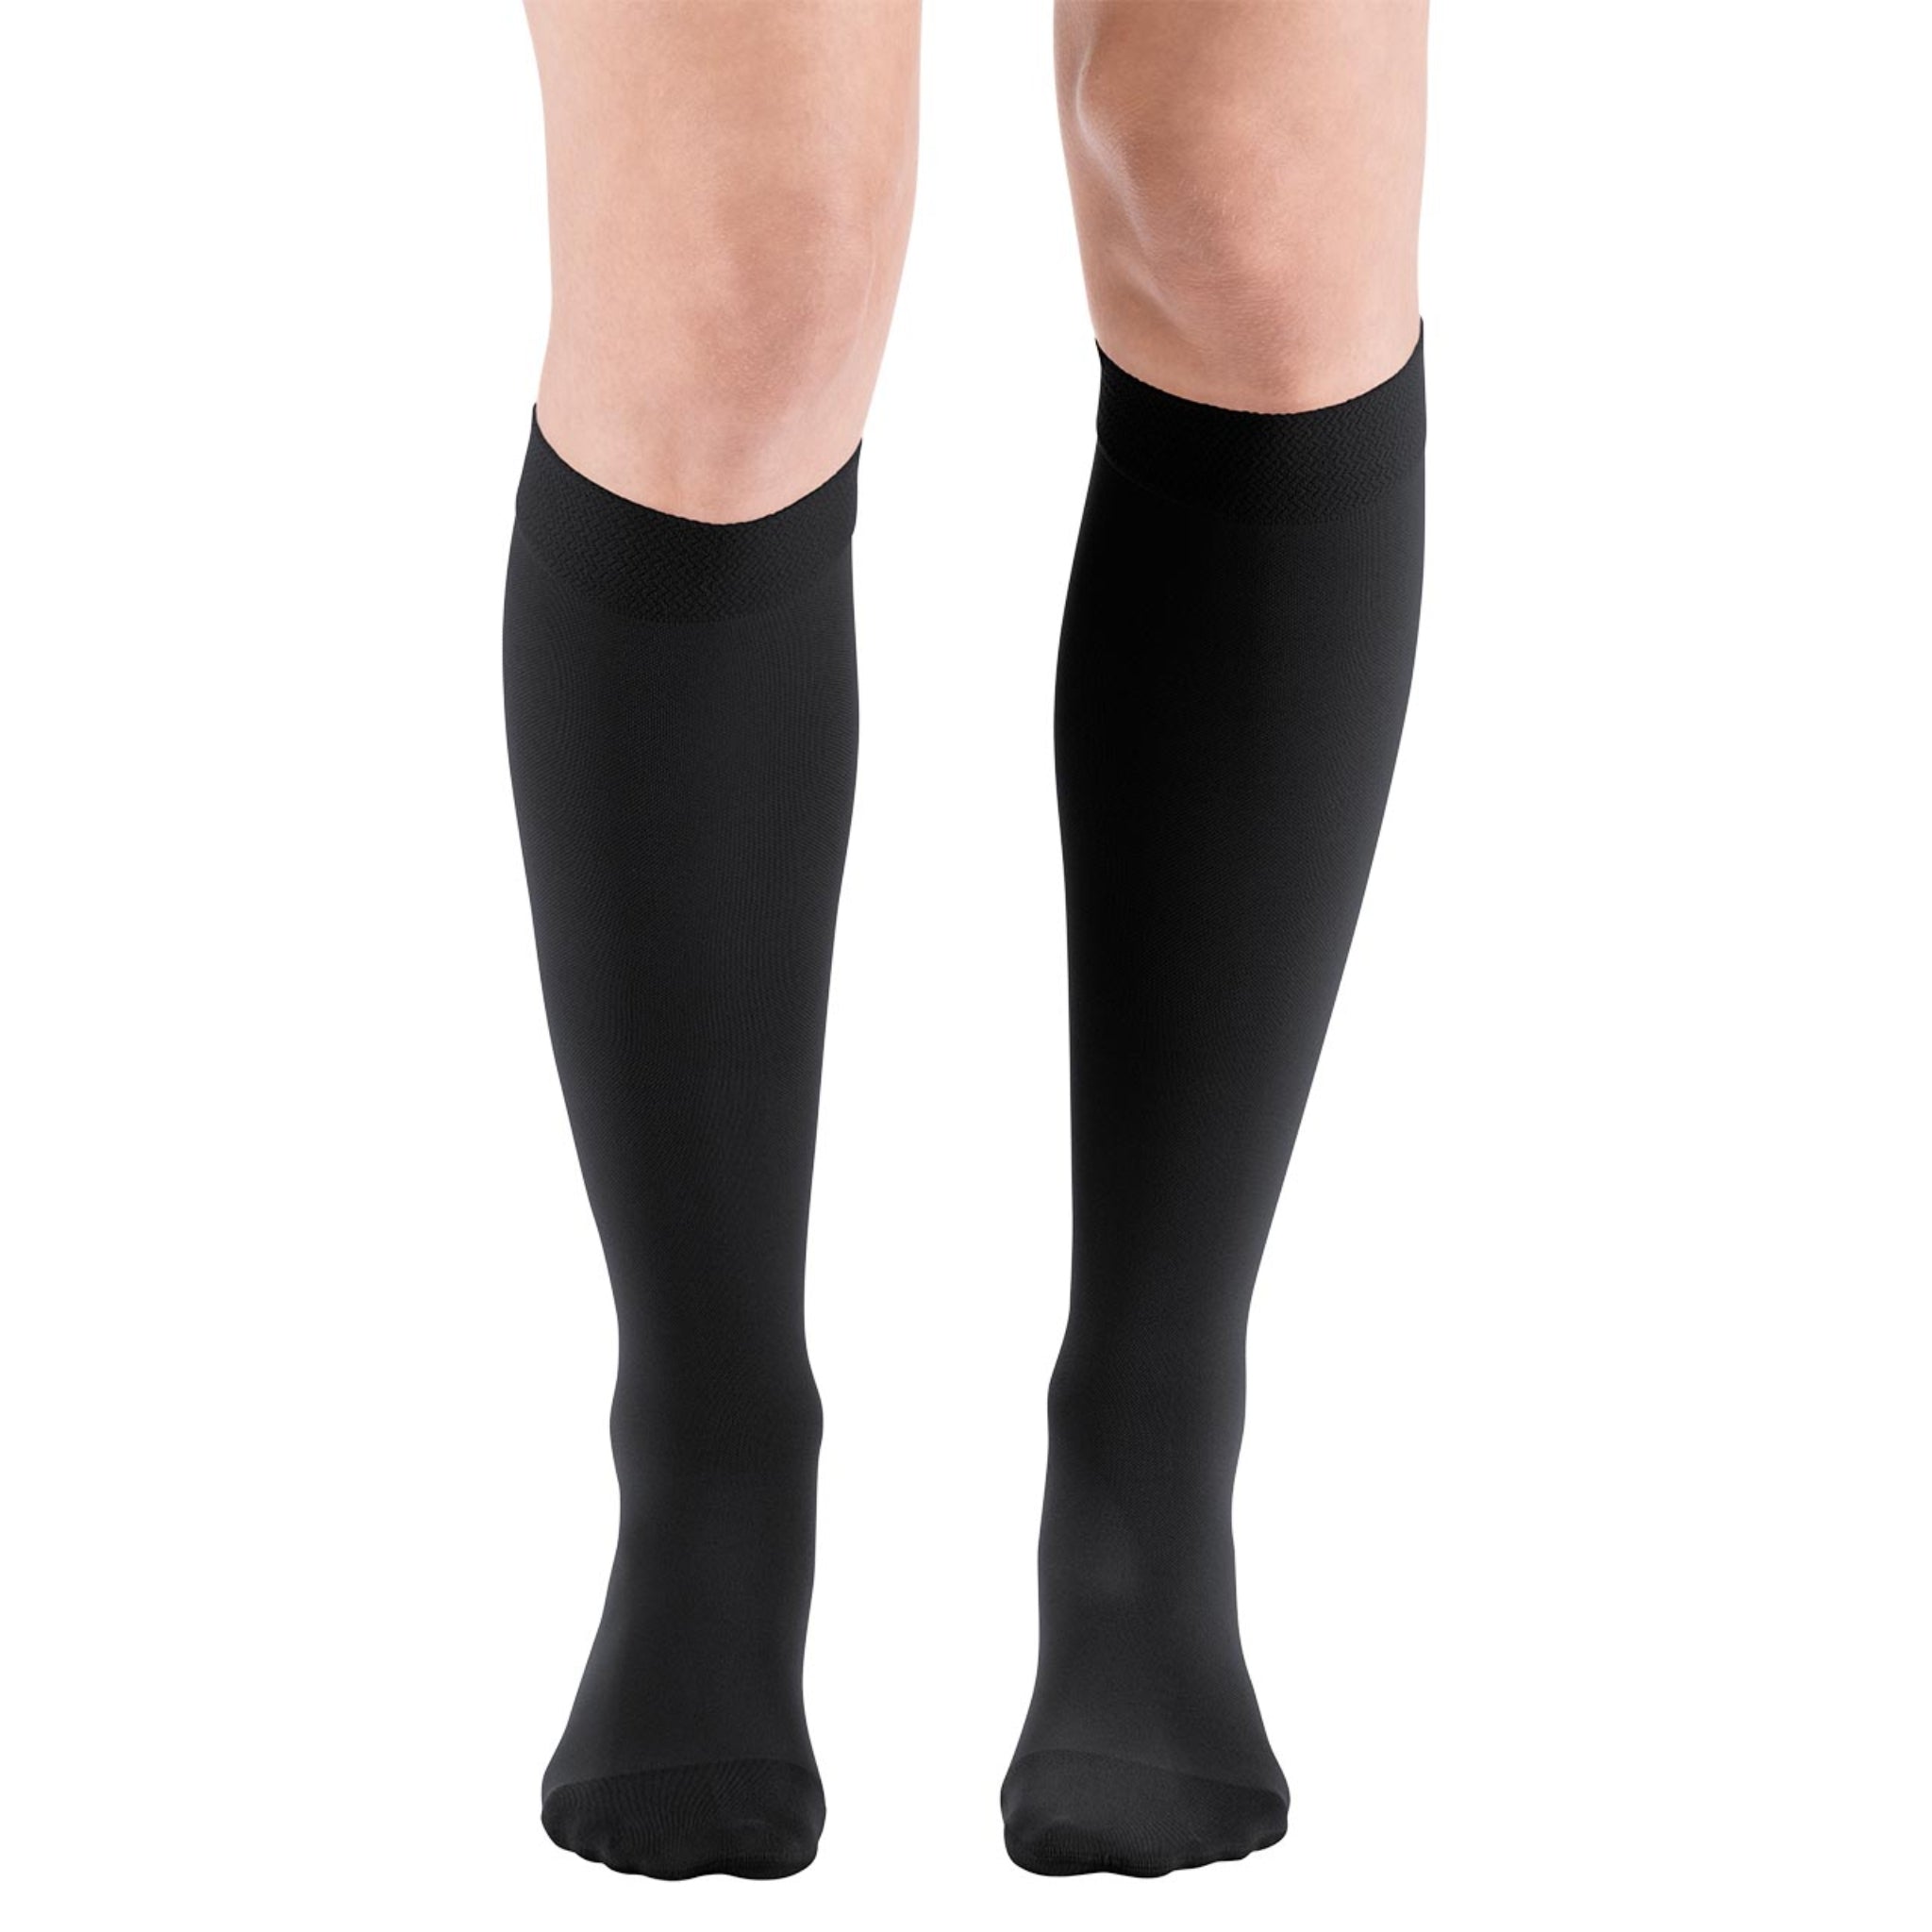 mediven®️ comfort Below Knee Compression Stockings Black